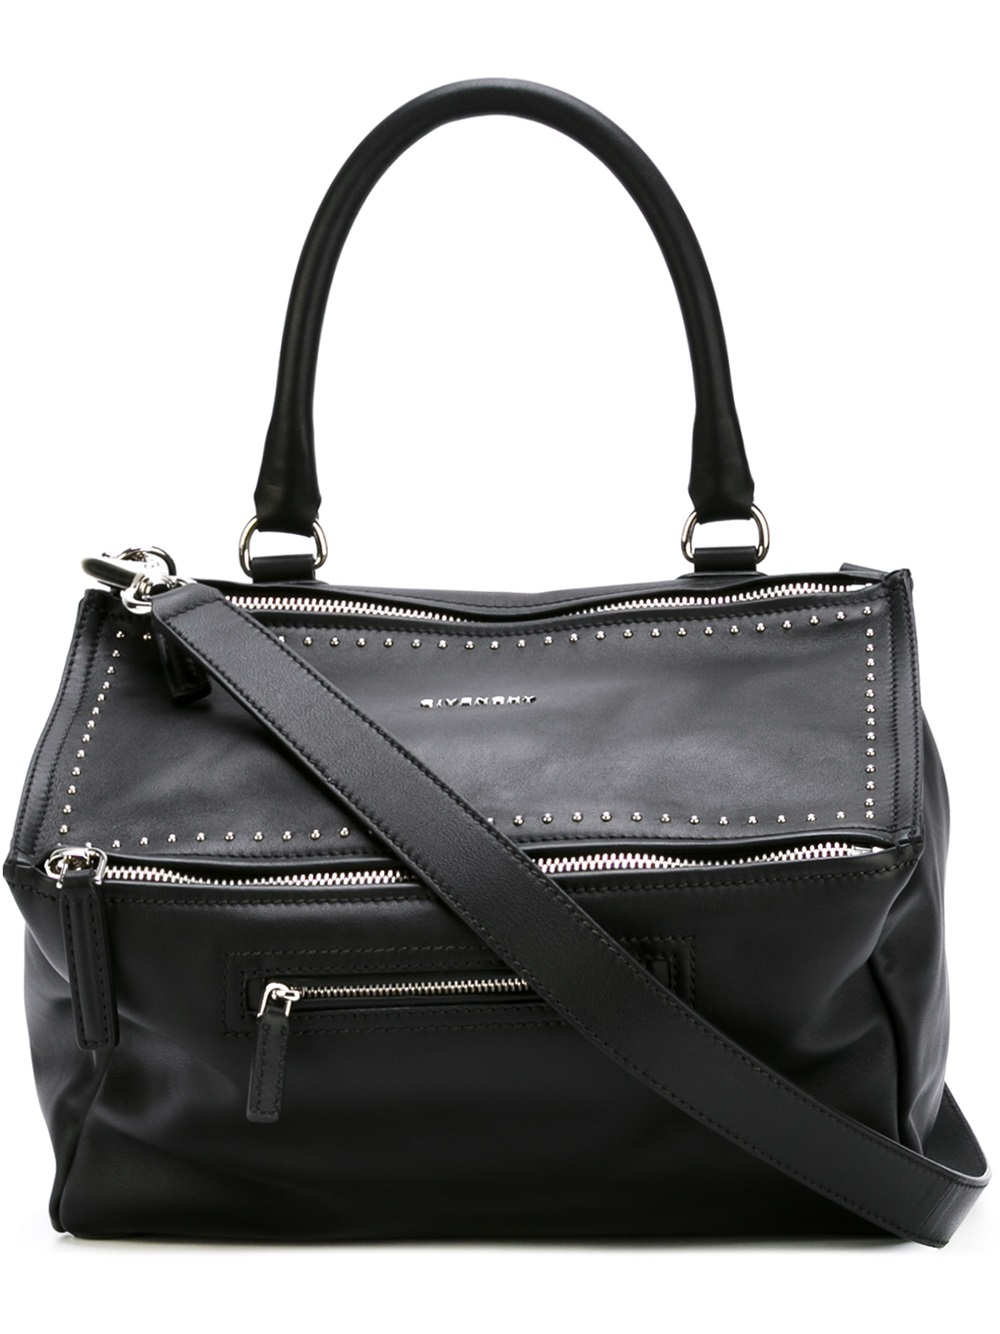 Givenchy Medium Pandora Handbag With Studs in Black | Lyst